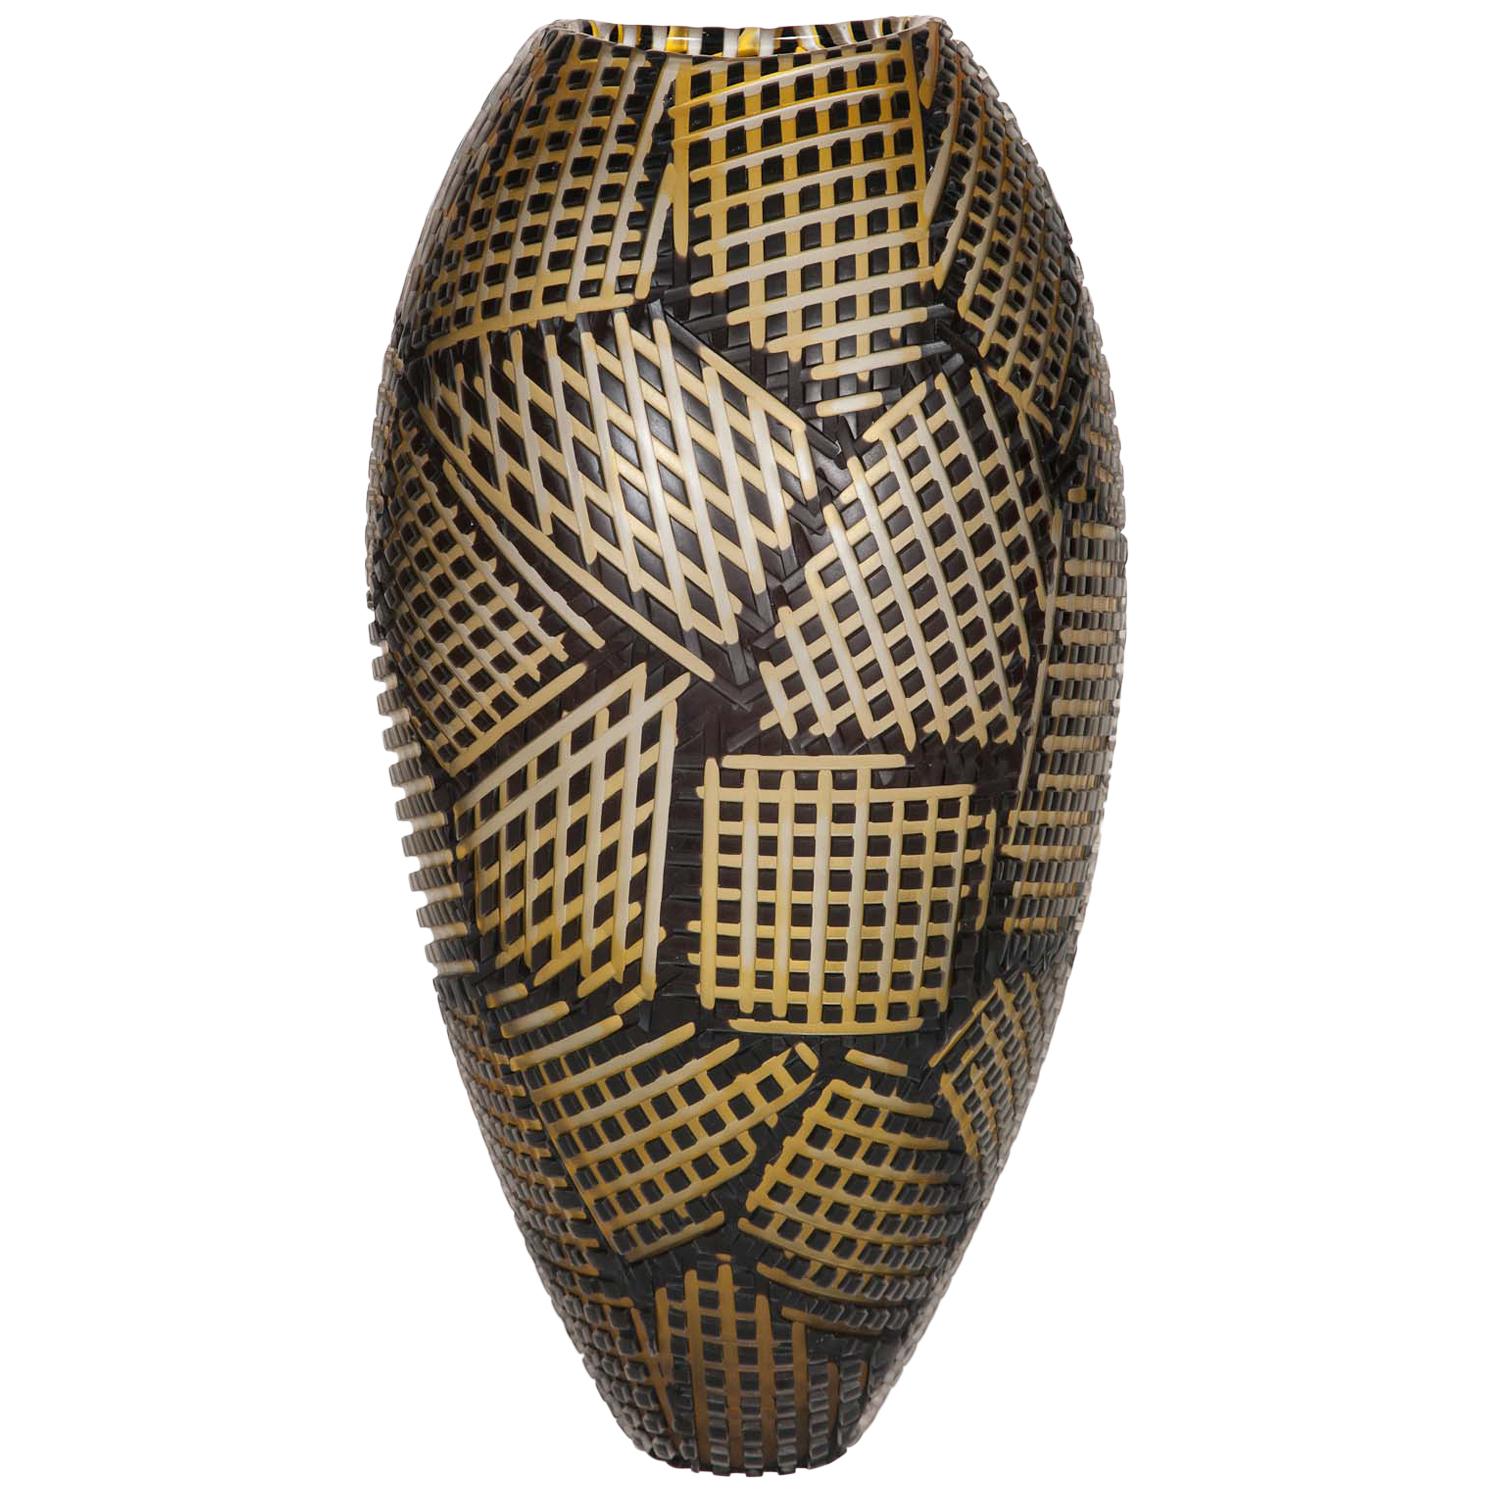 Little Stitches II, an Art Glass Vase by Philip Baldwin & Monica Guggisberg